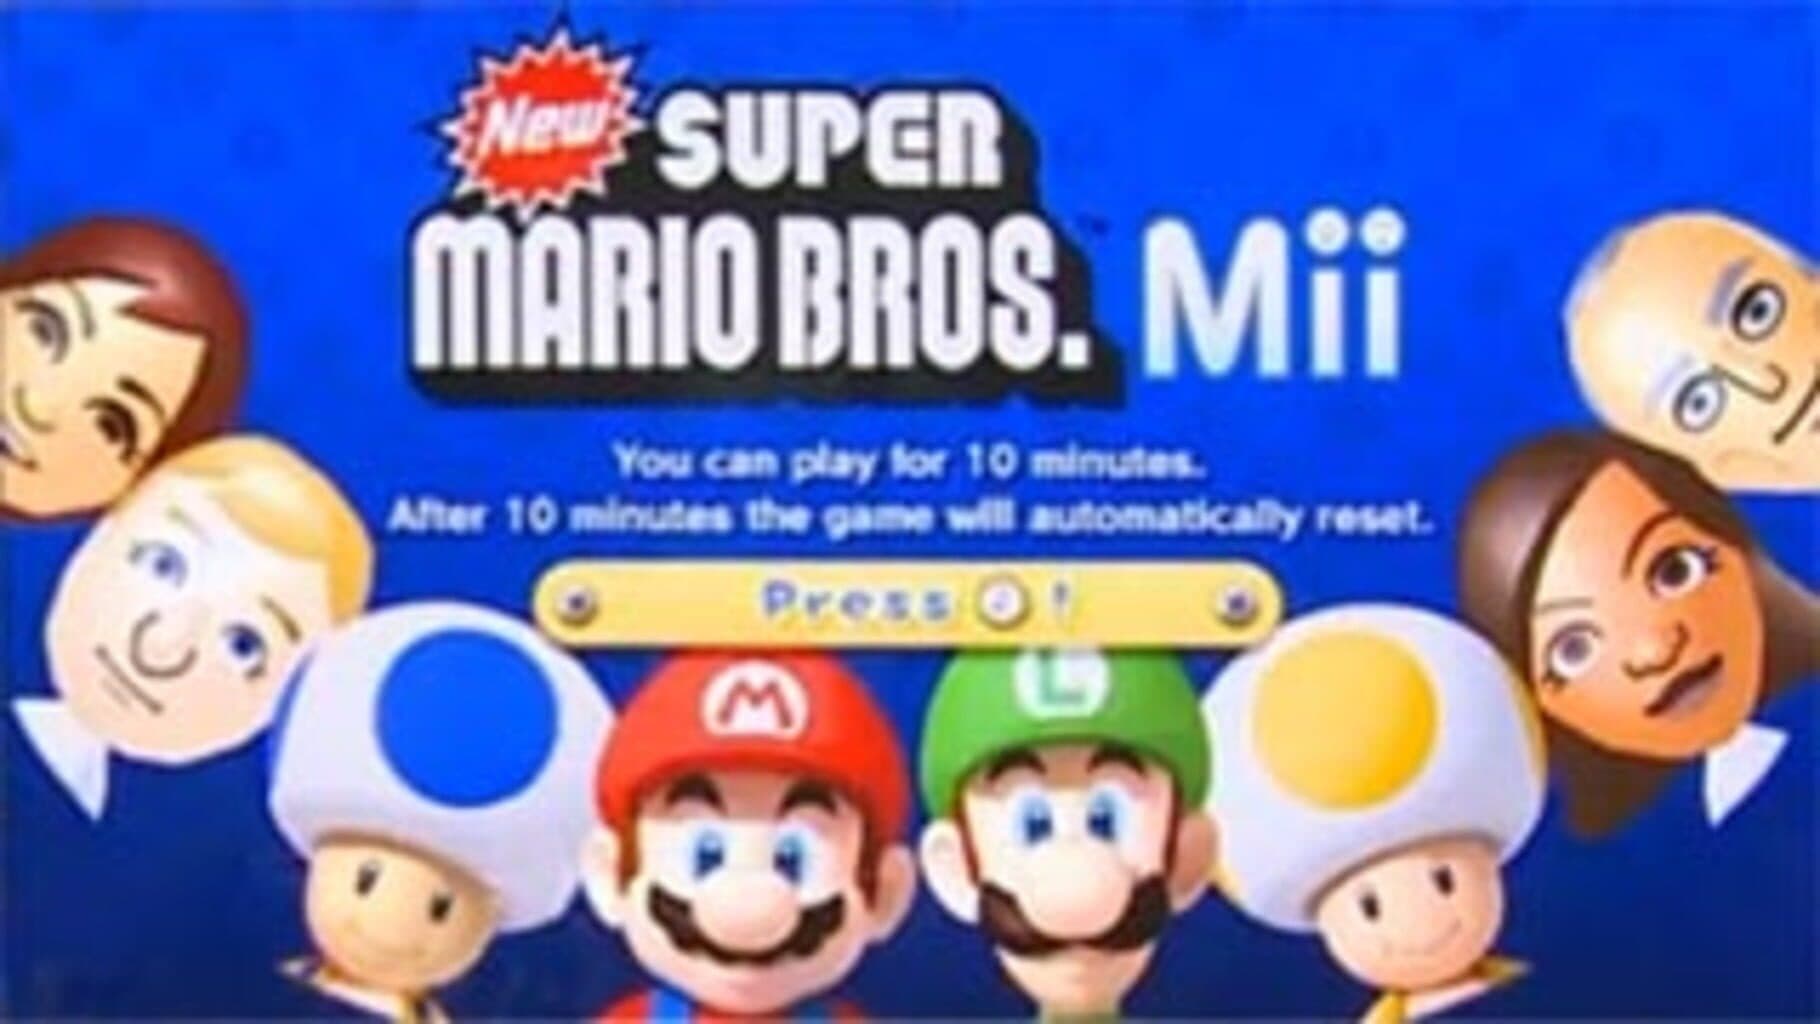 New Super Mario Bros. Mii Image